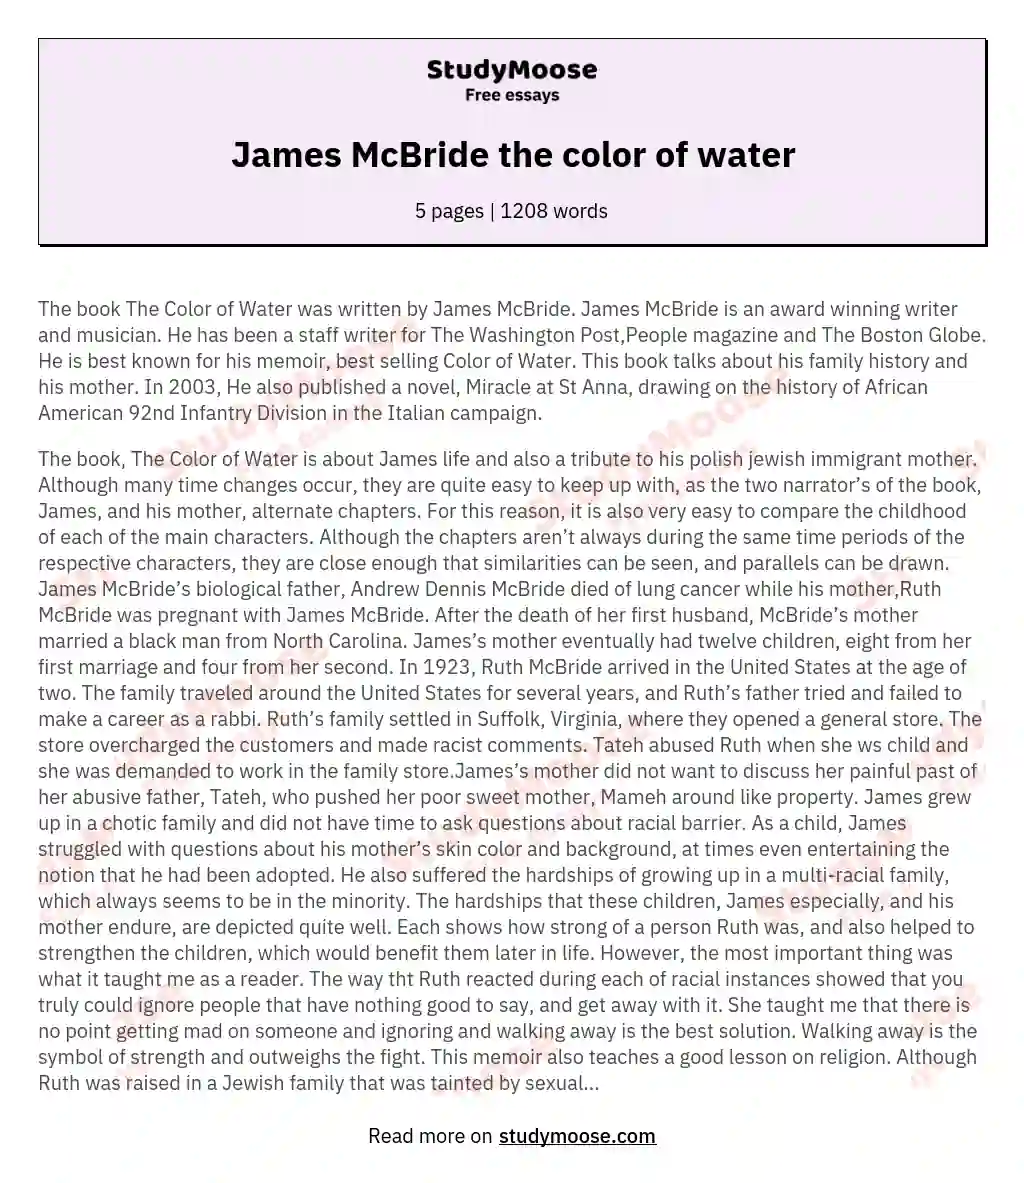 James McBride the color of water essay